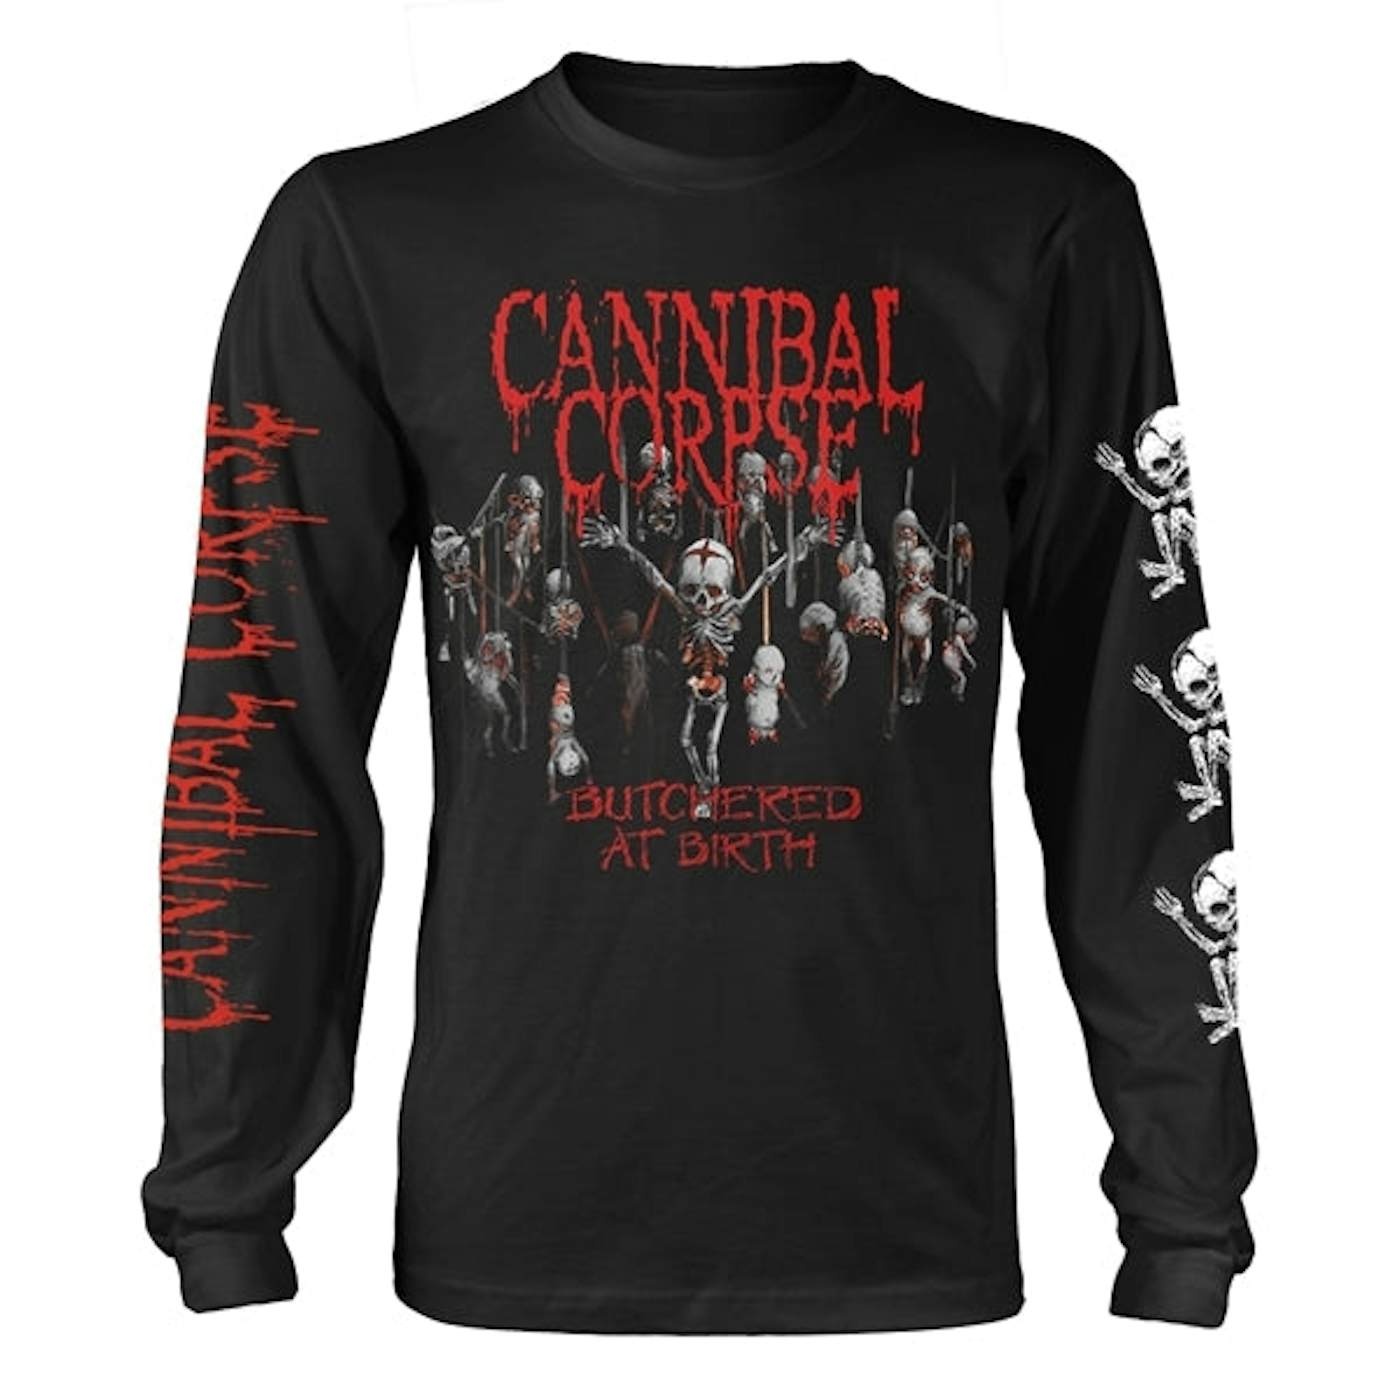 Cannibal Corpse Long Sleeve T Shirt - Butchered At Birth Baby